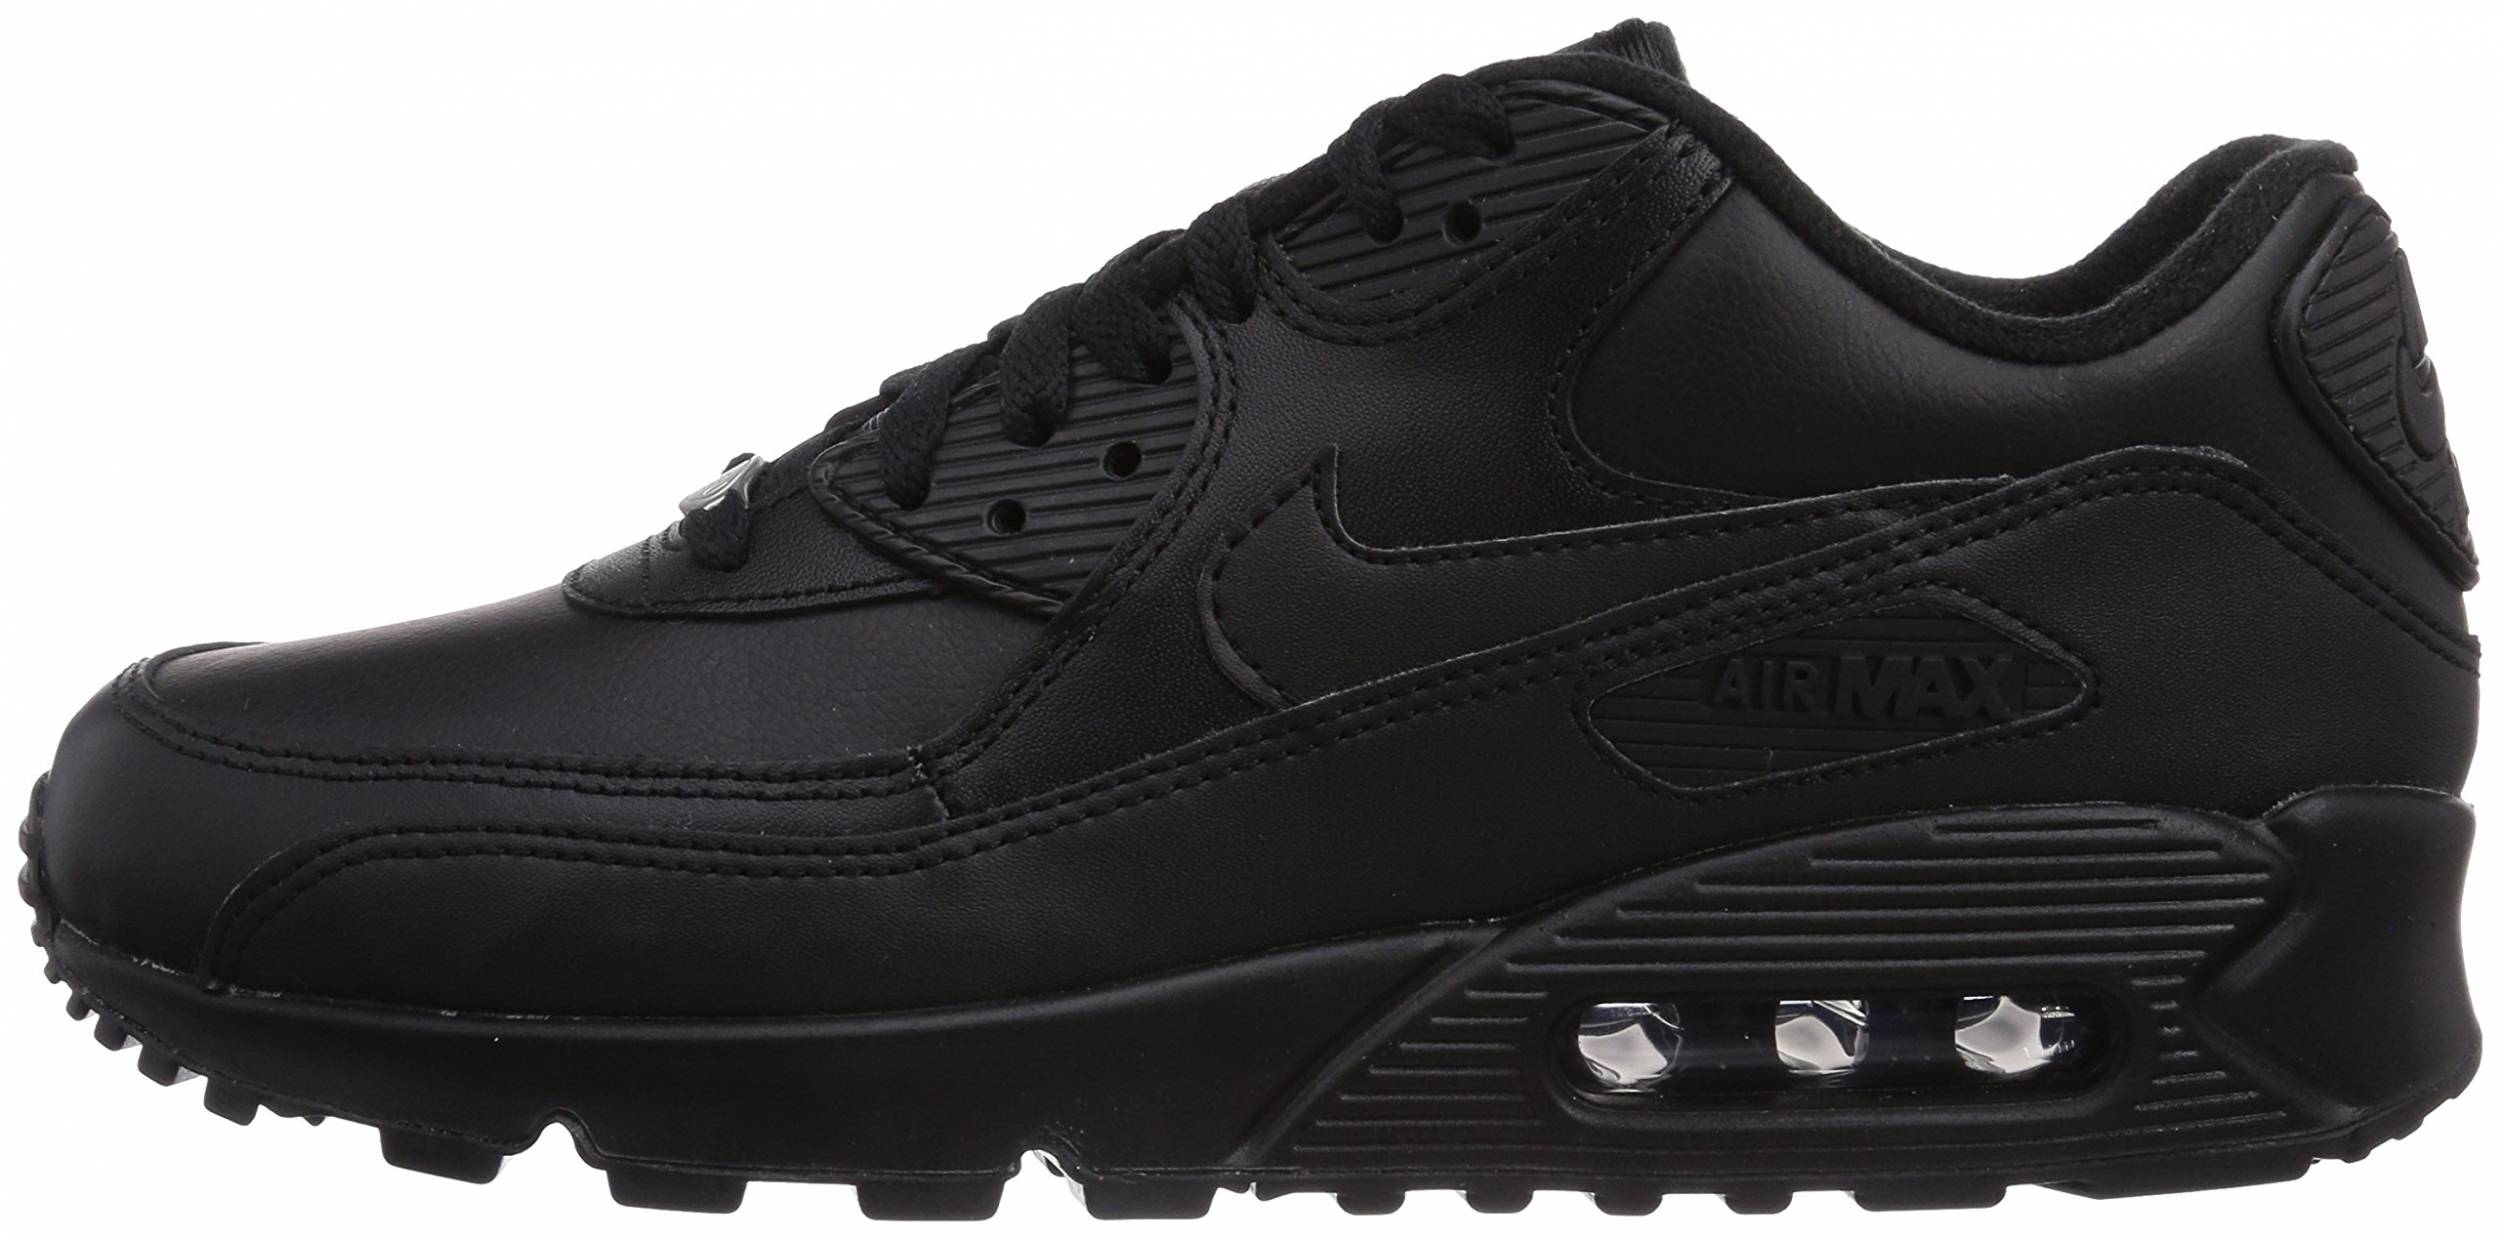 Nike Air Max 90 Leather sneakers in black white | RunRepeat